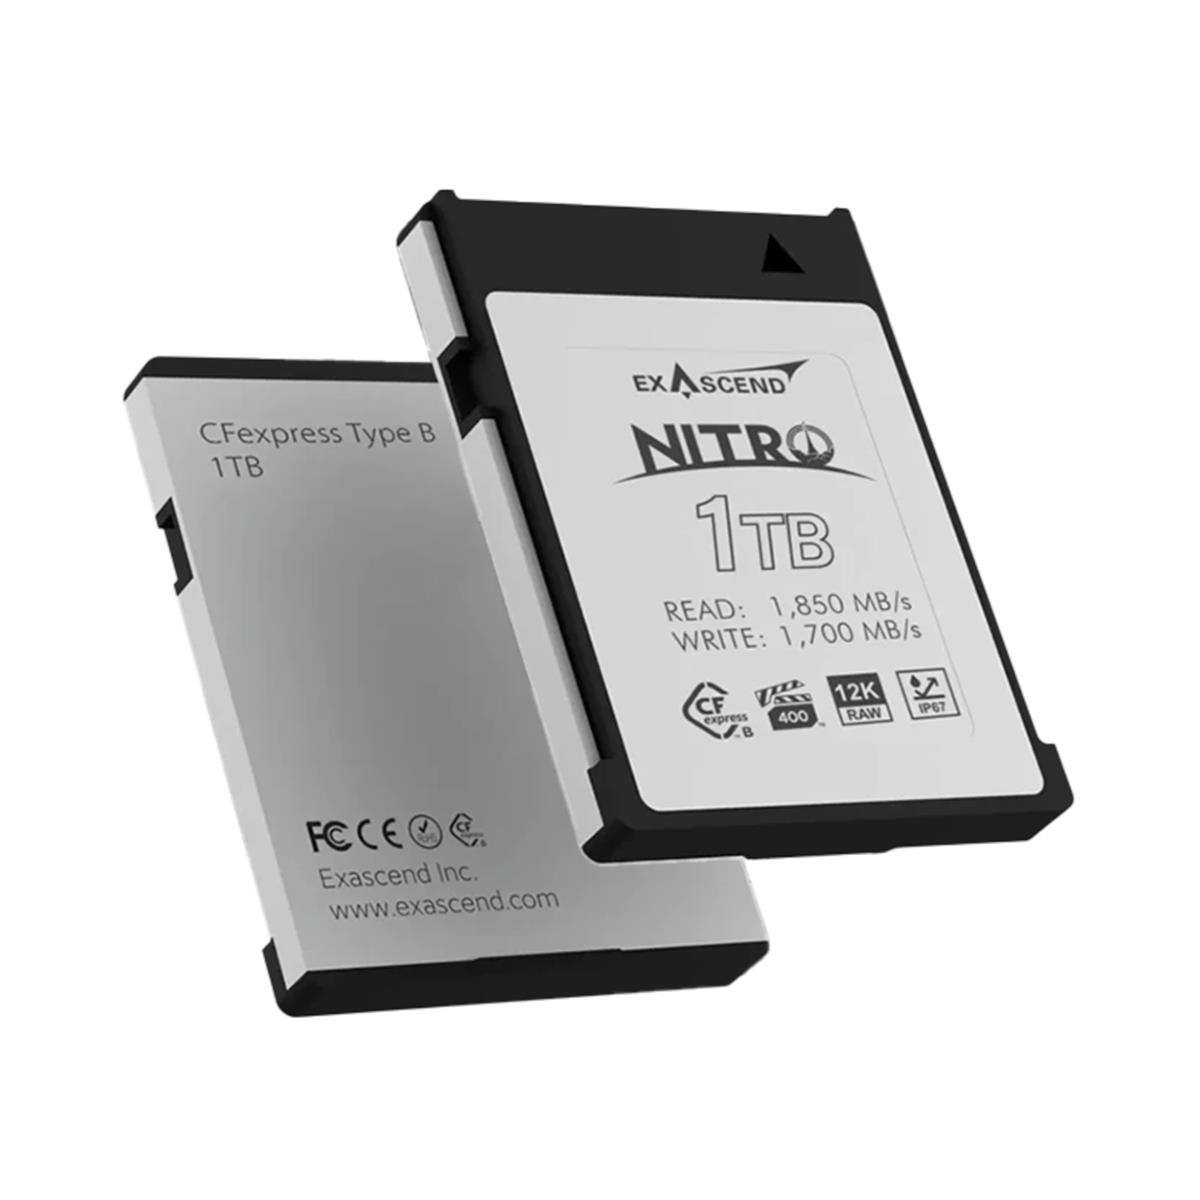 Exascend Nitro CFexpress Type B Memory Card